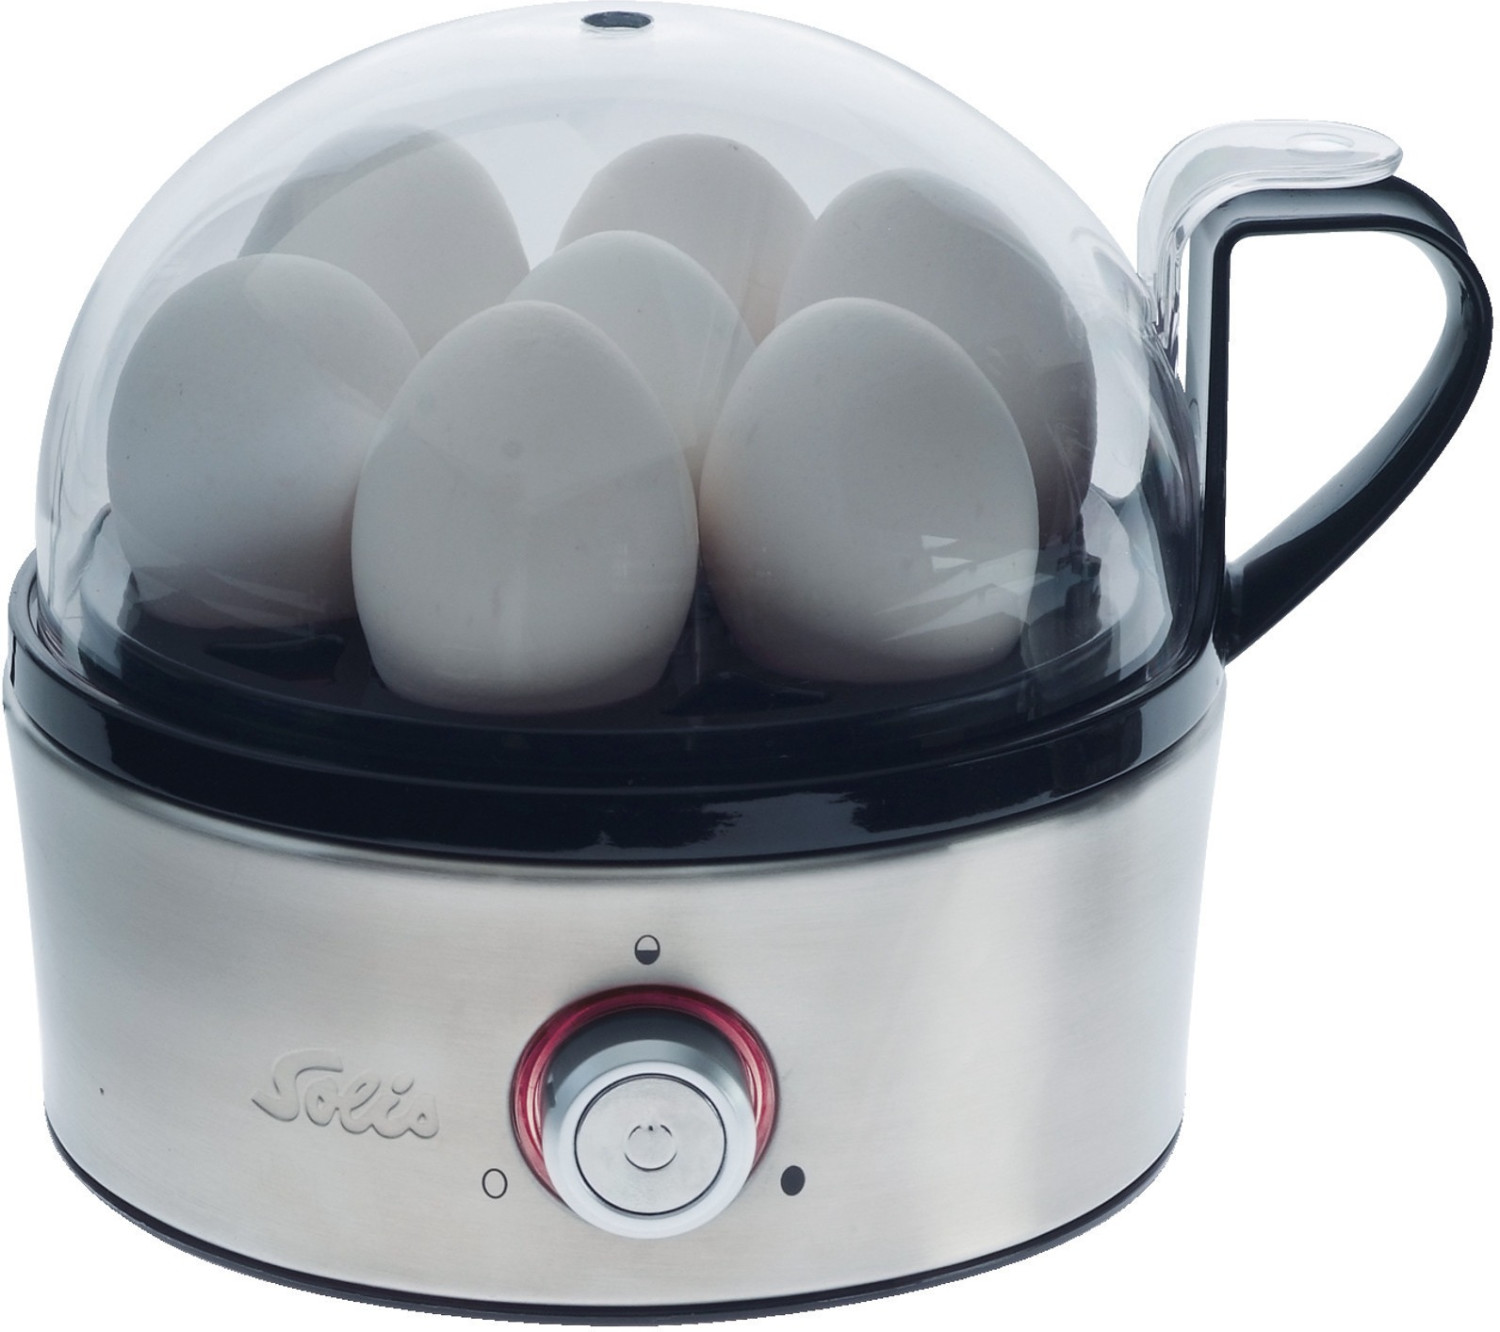 Solis Egg Boiler & more 827